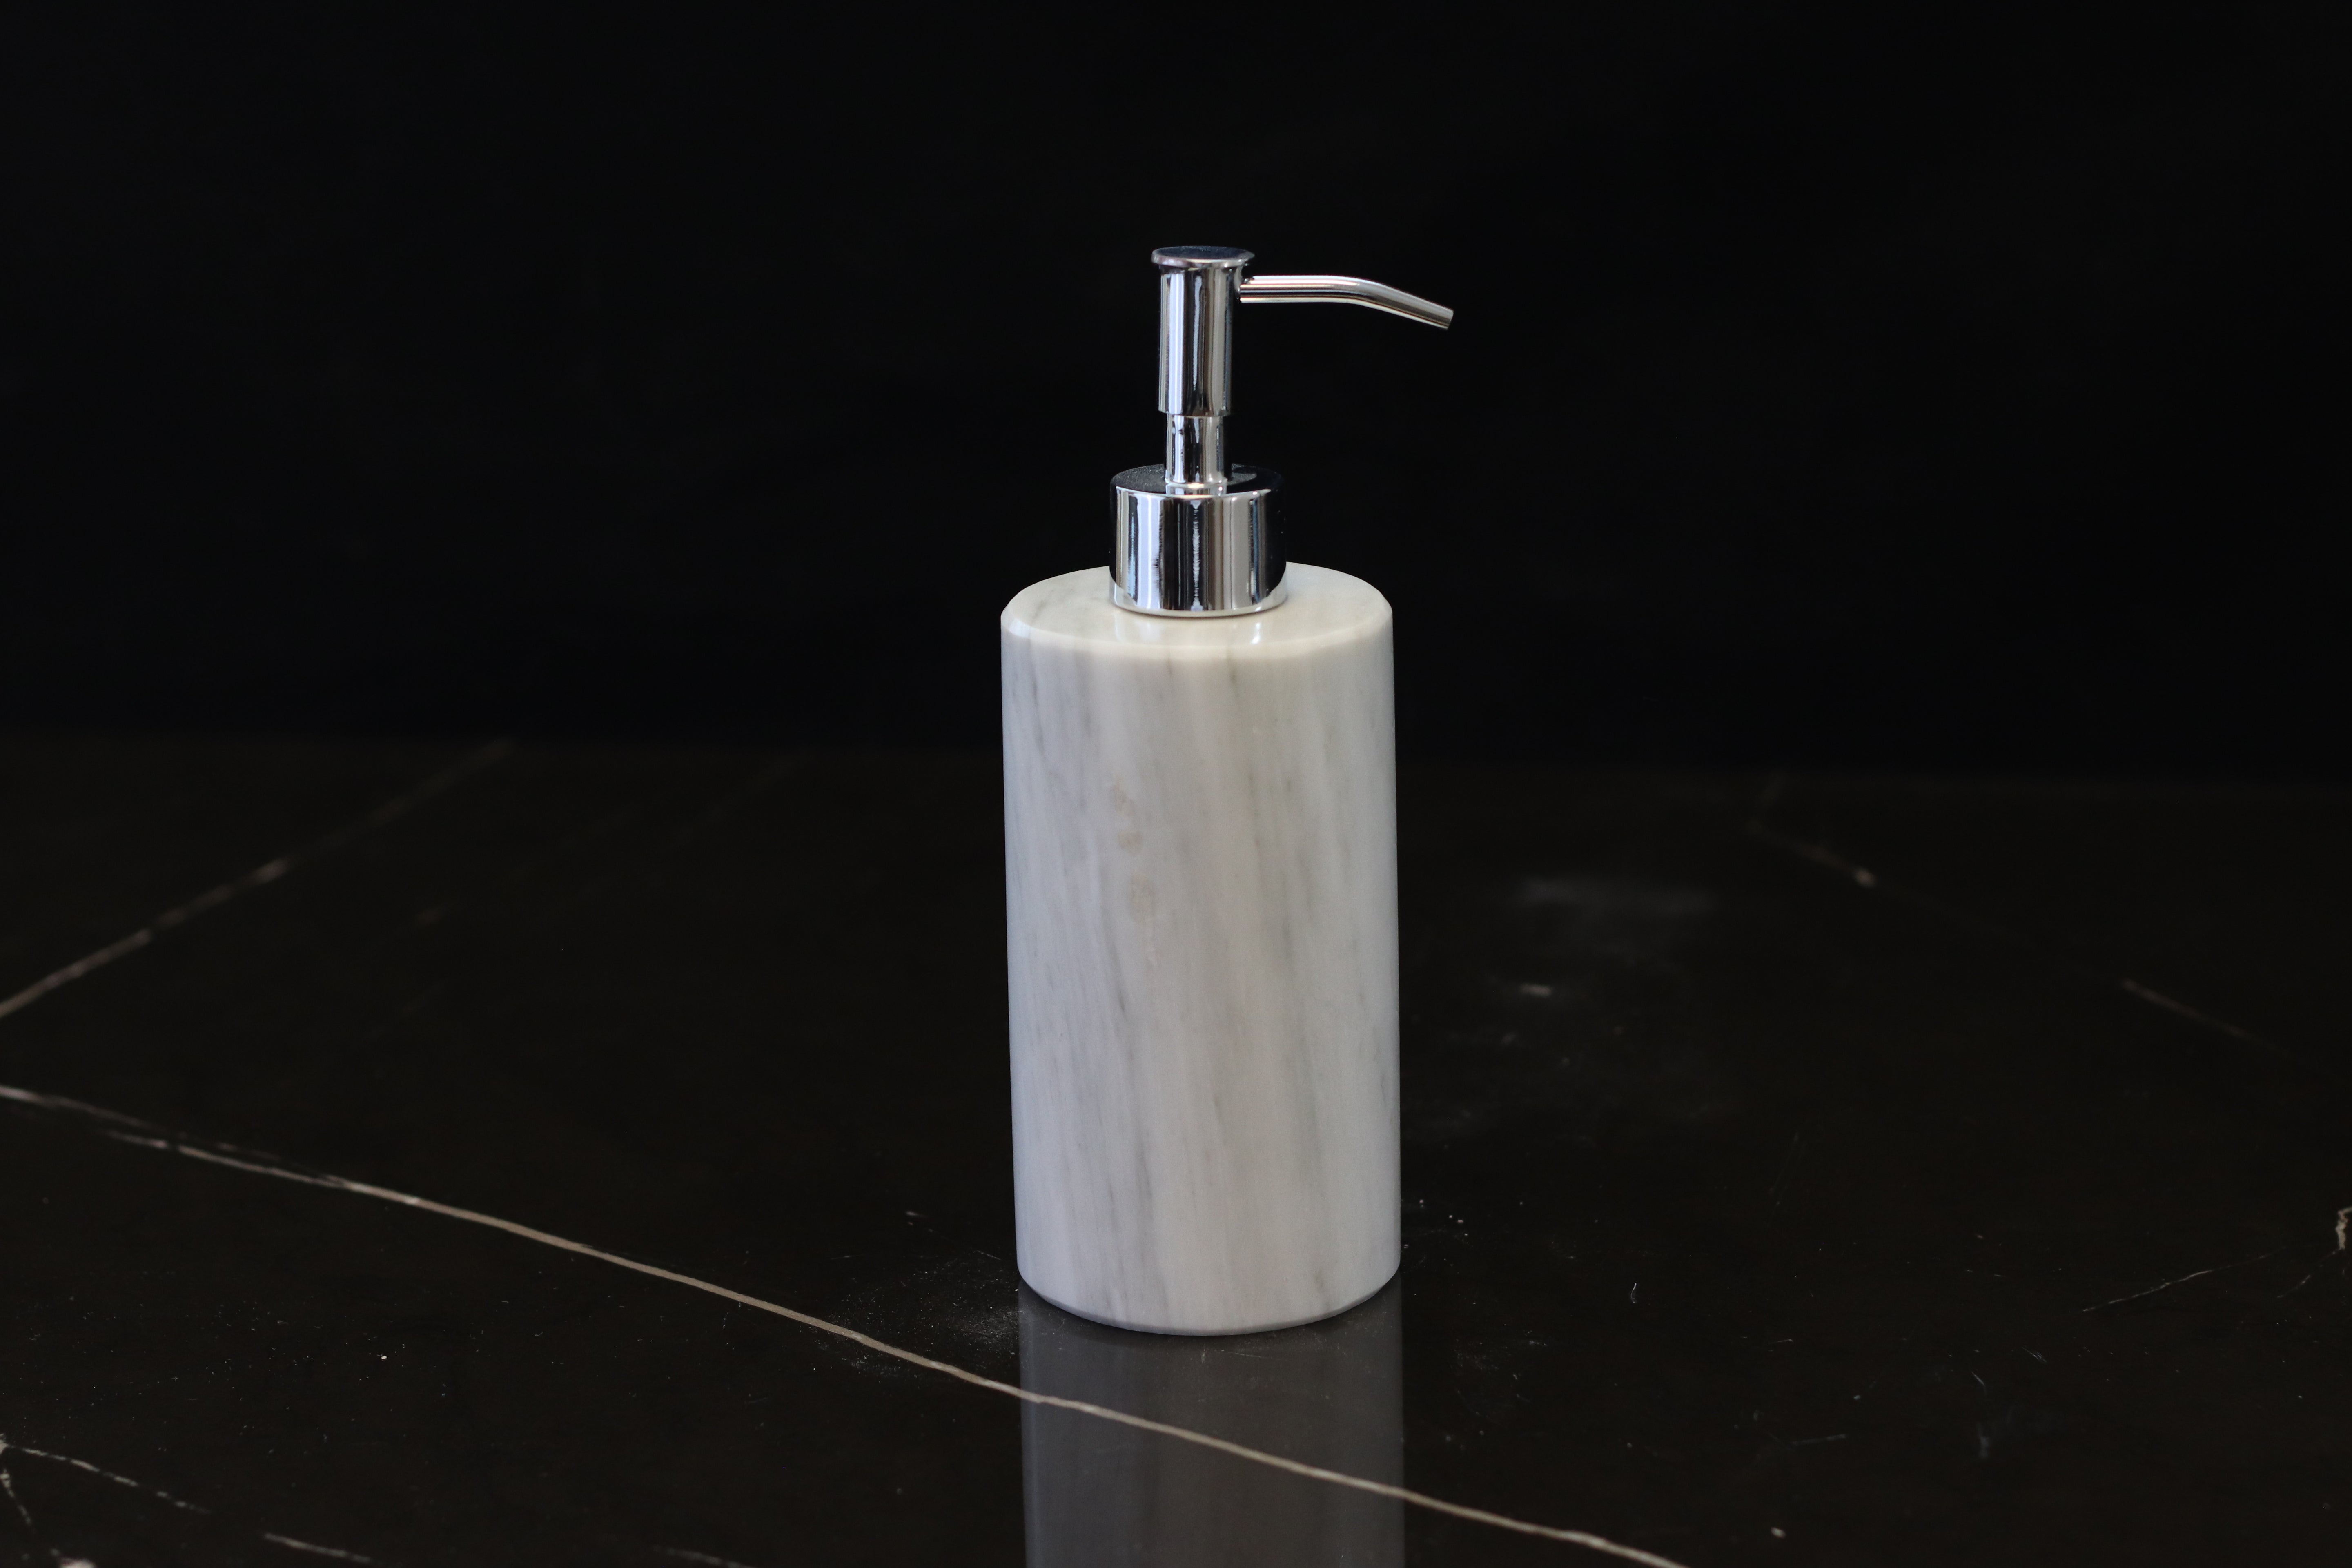 Onyx Stone Liquid Soap or Lotion Dispenser. Nickel Spout. Handmade. Buy Now at www.felipeandgrace.com.